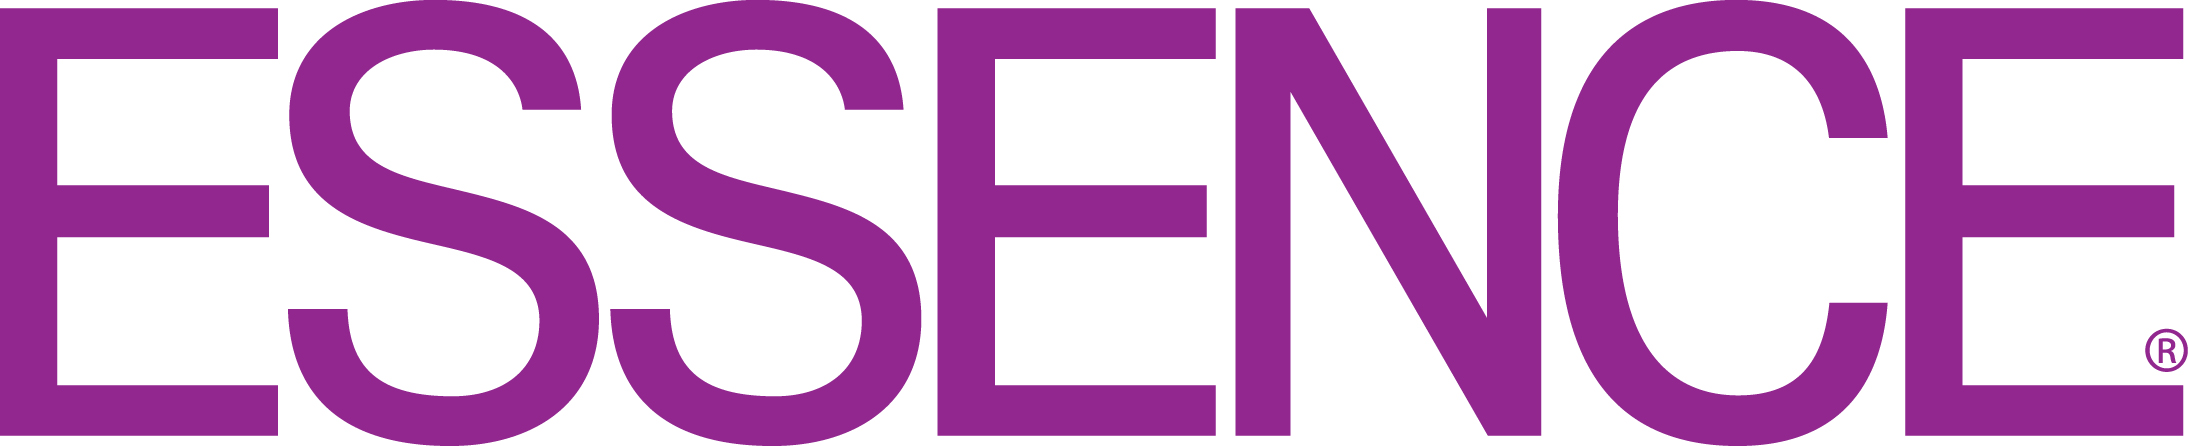 EssensiE Magazine Logo photo - 1